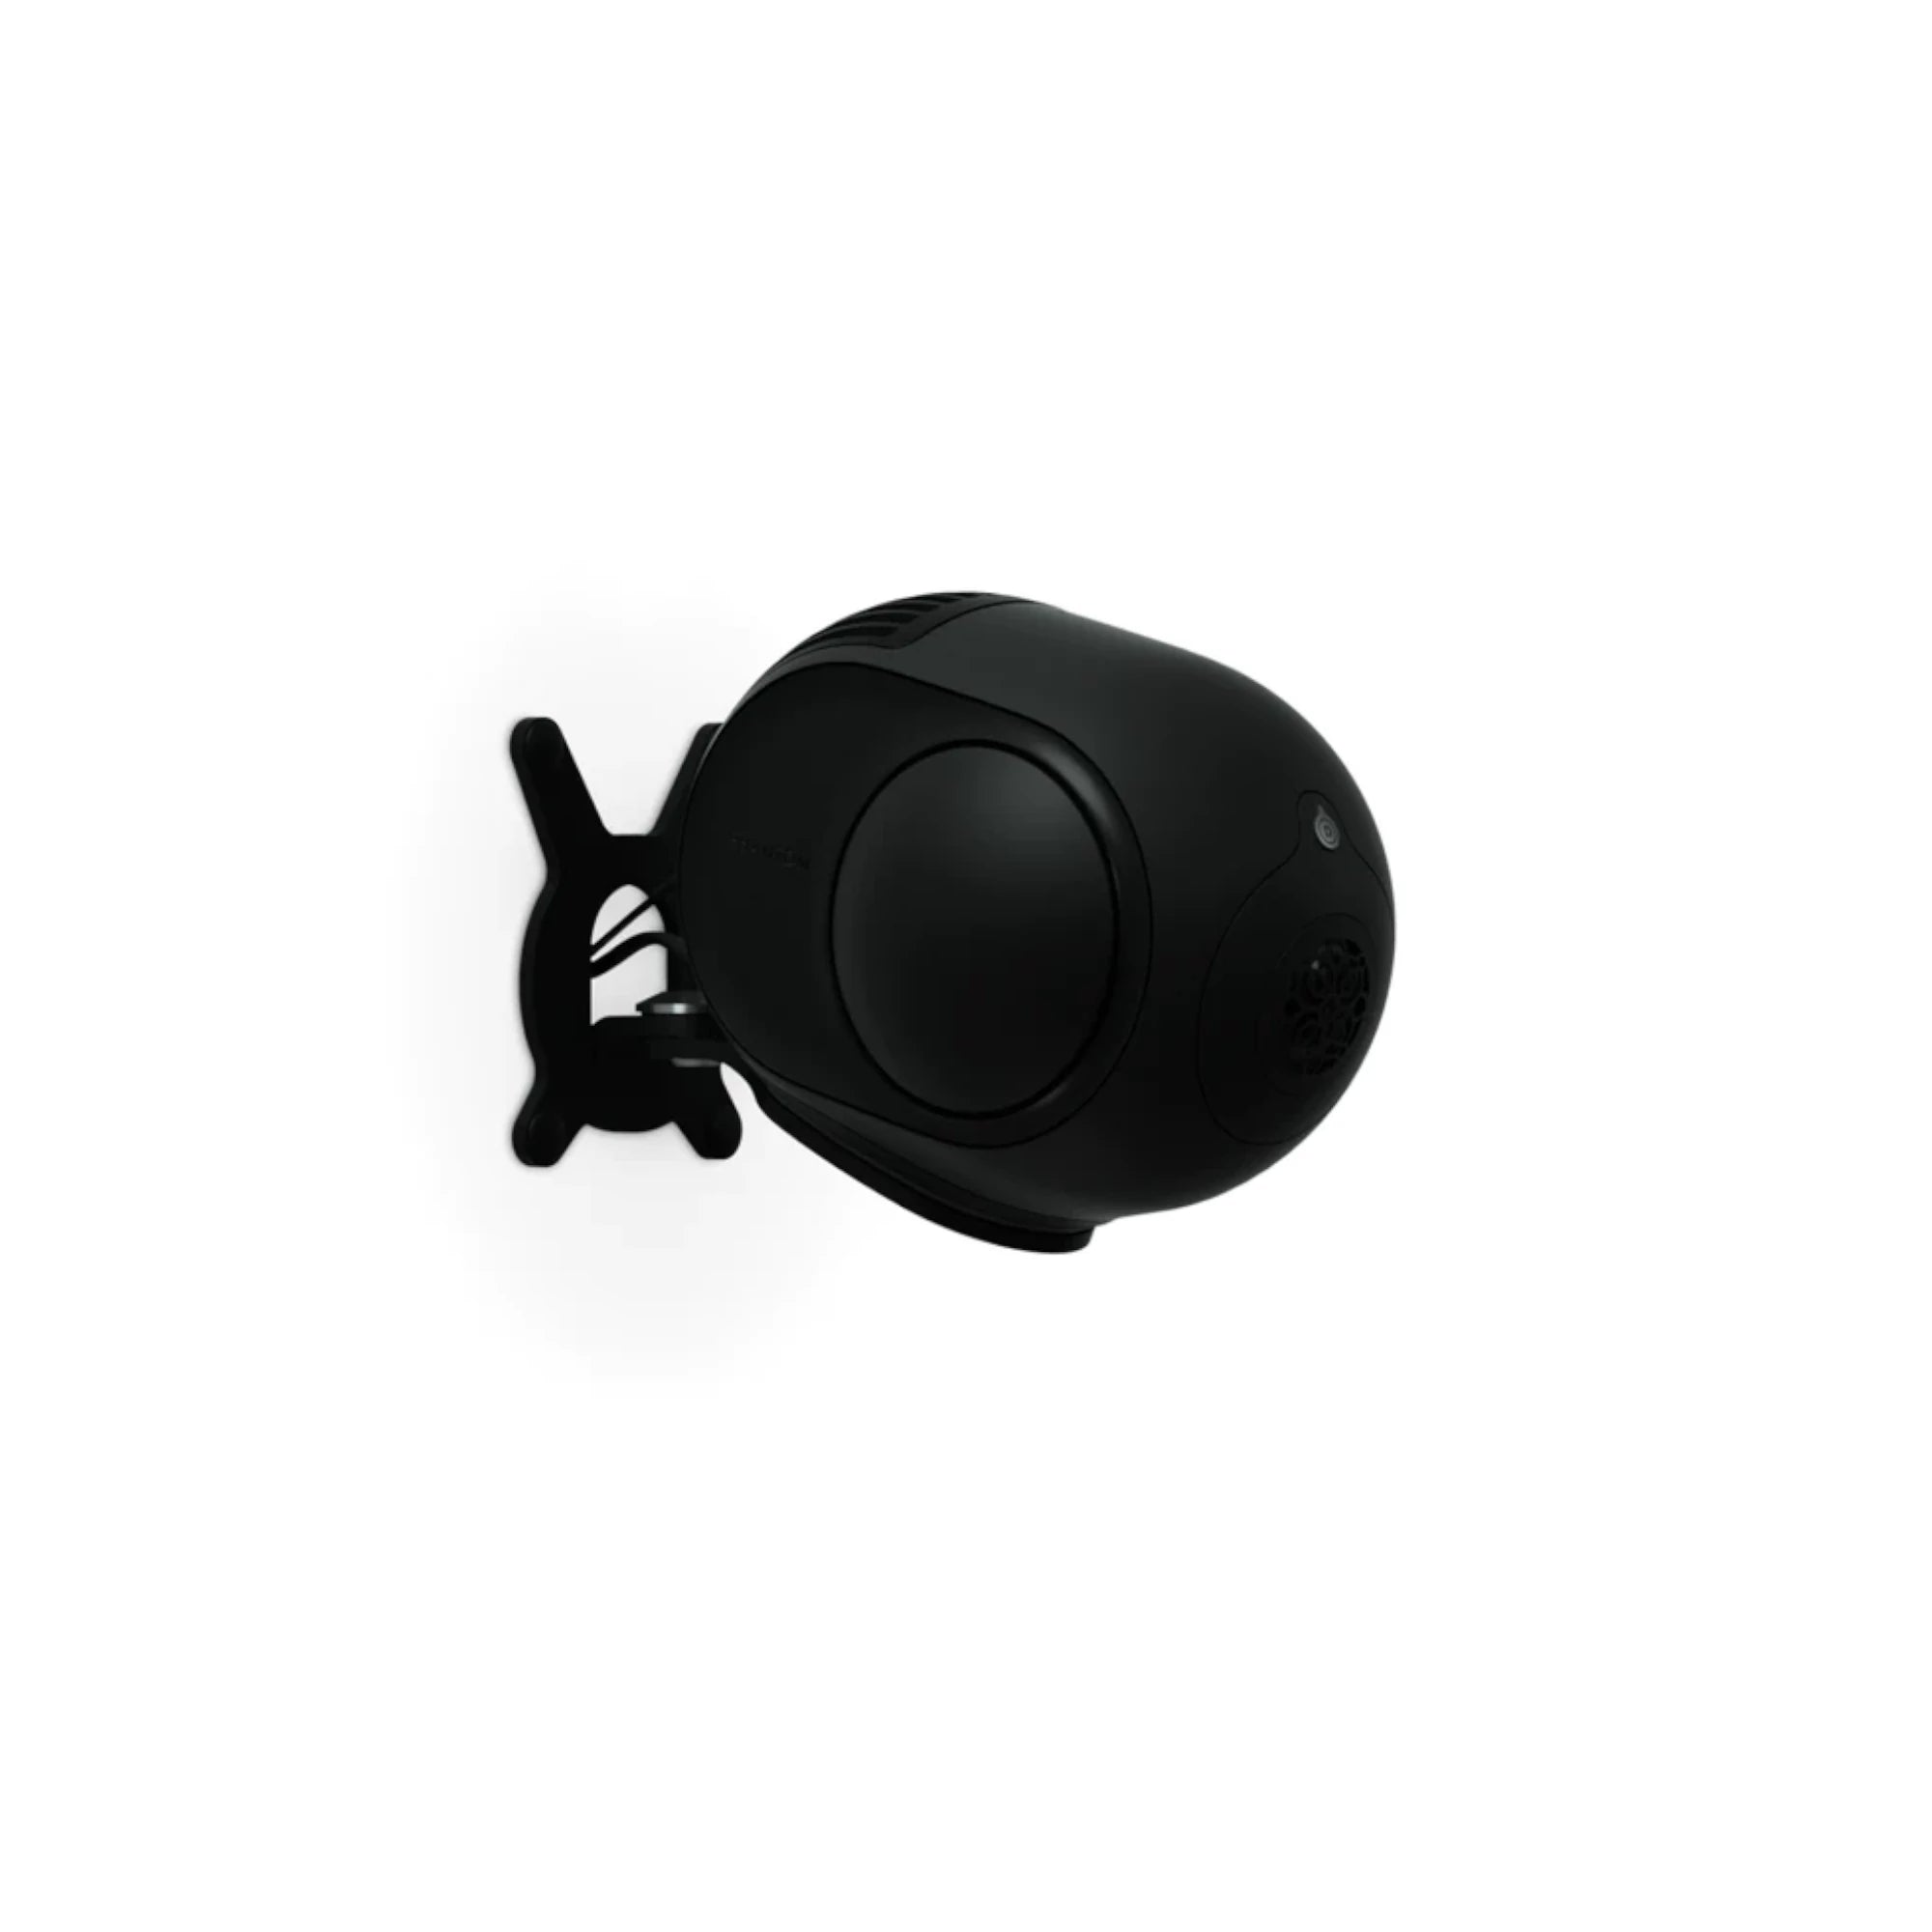 Devialet Phantom II Custom Compact speaker - Matte Black